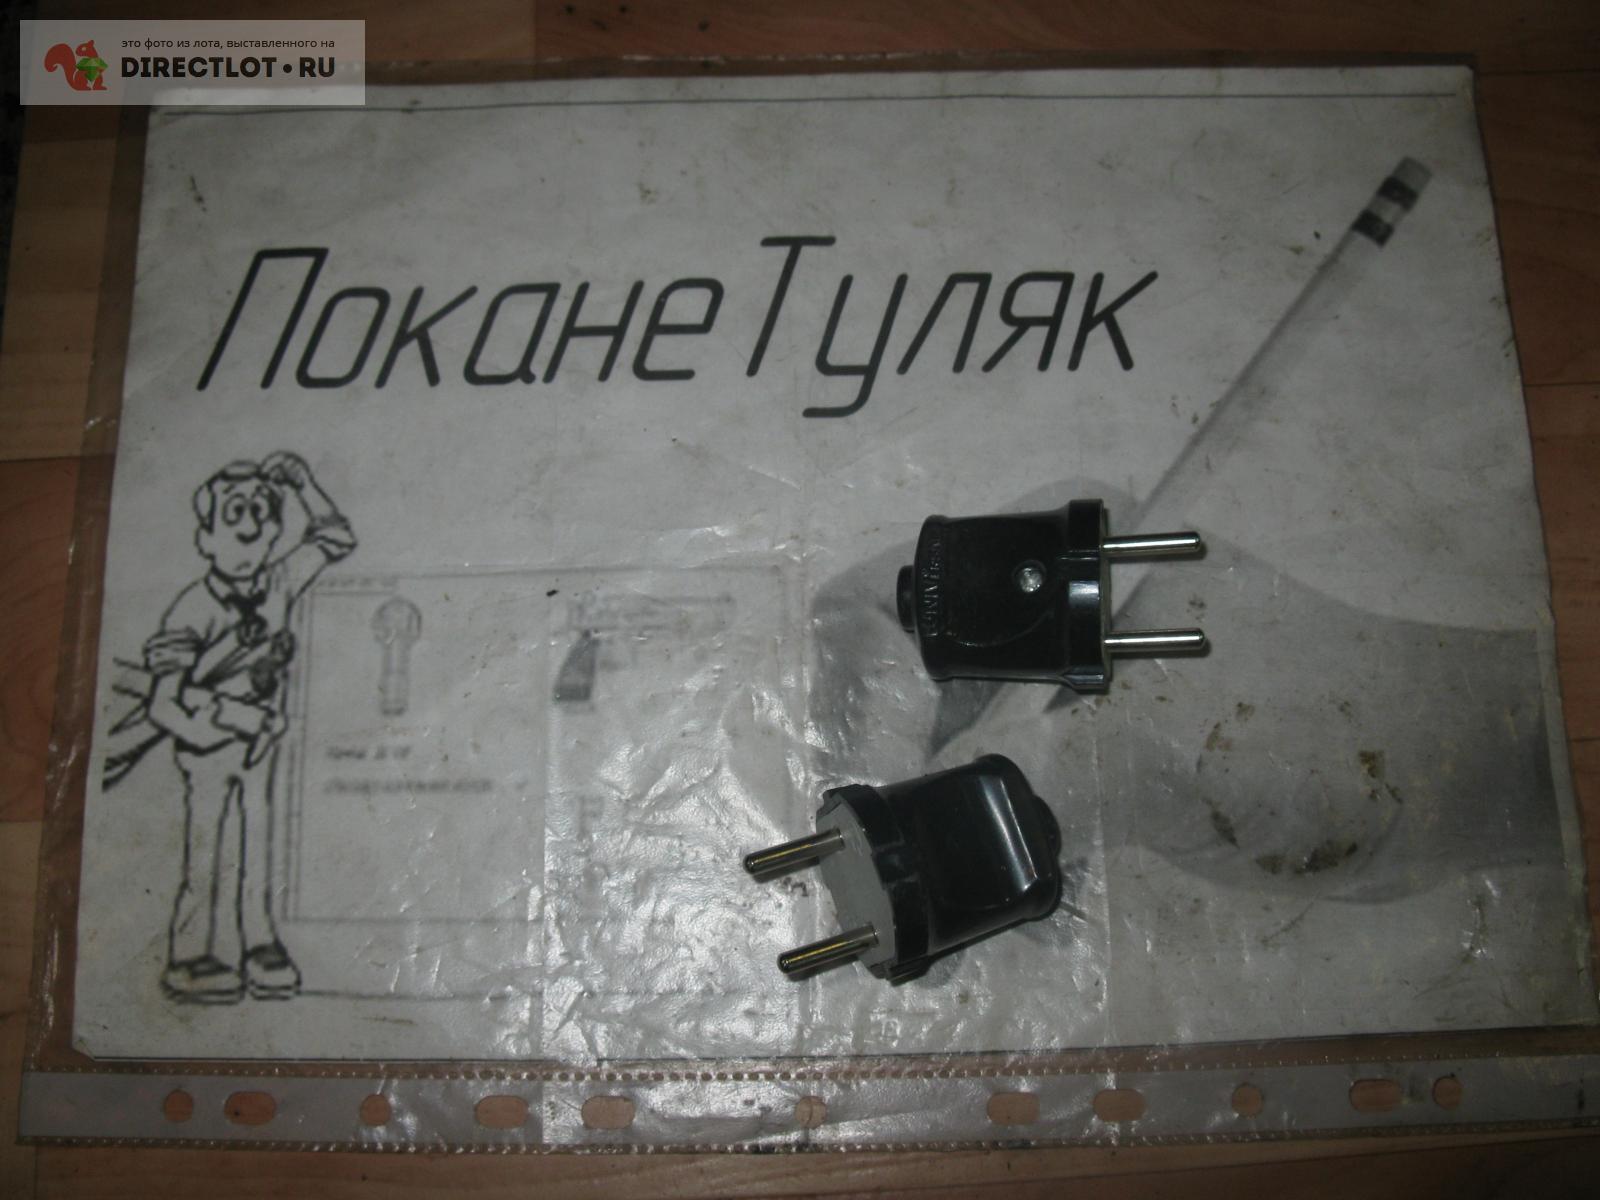  электрические стандарта одним лотом  в Томске цена 30,00 Р .